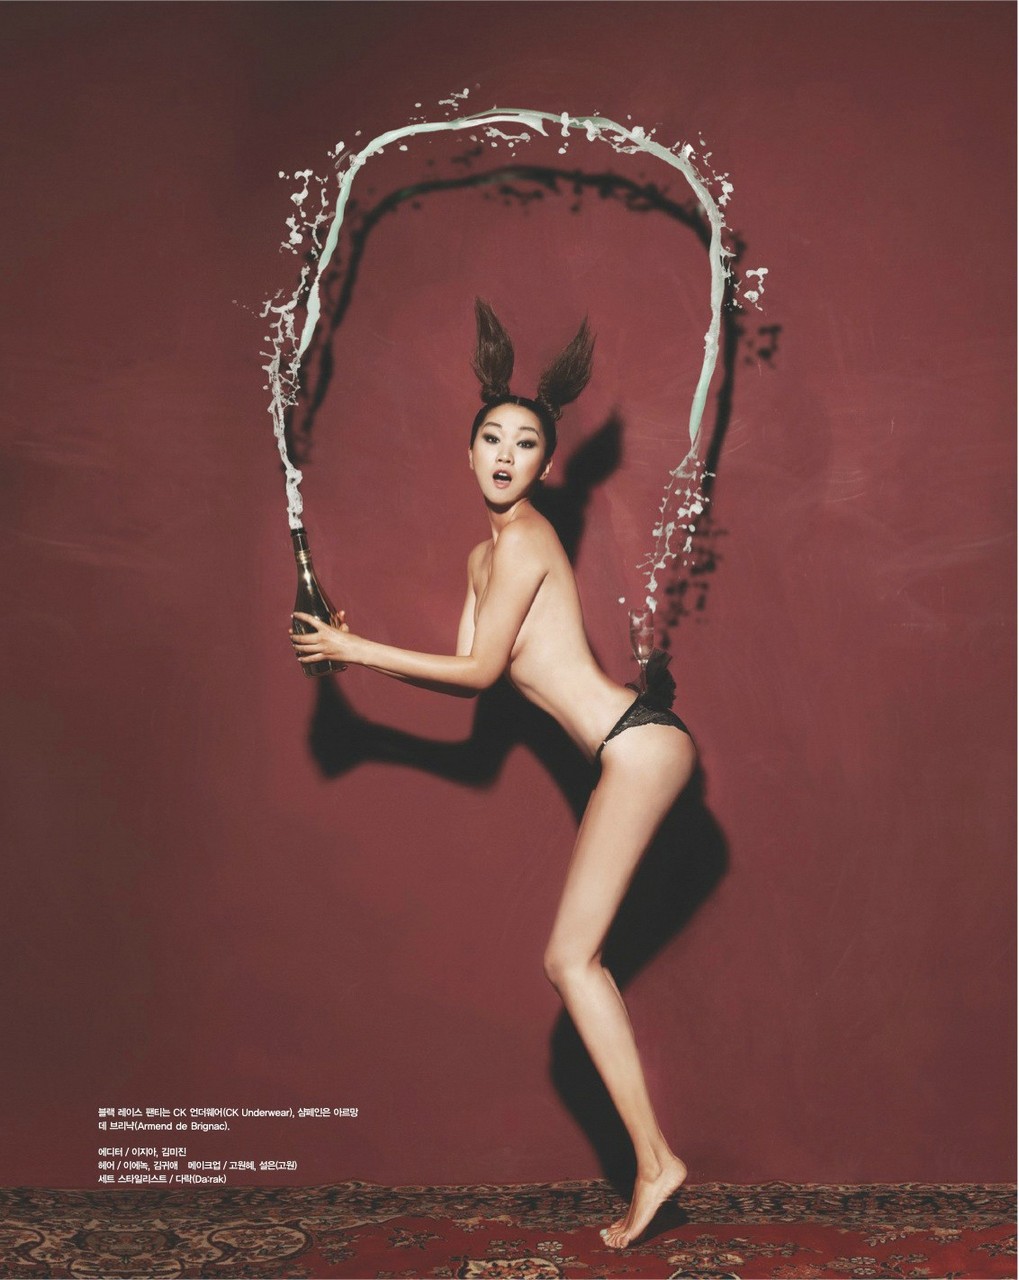 Kfeets Model Jang Yoon Joo Long Before The Kardashian Tried To Break The Internet NSFW Ish Fee